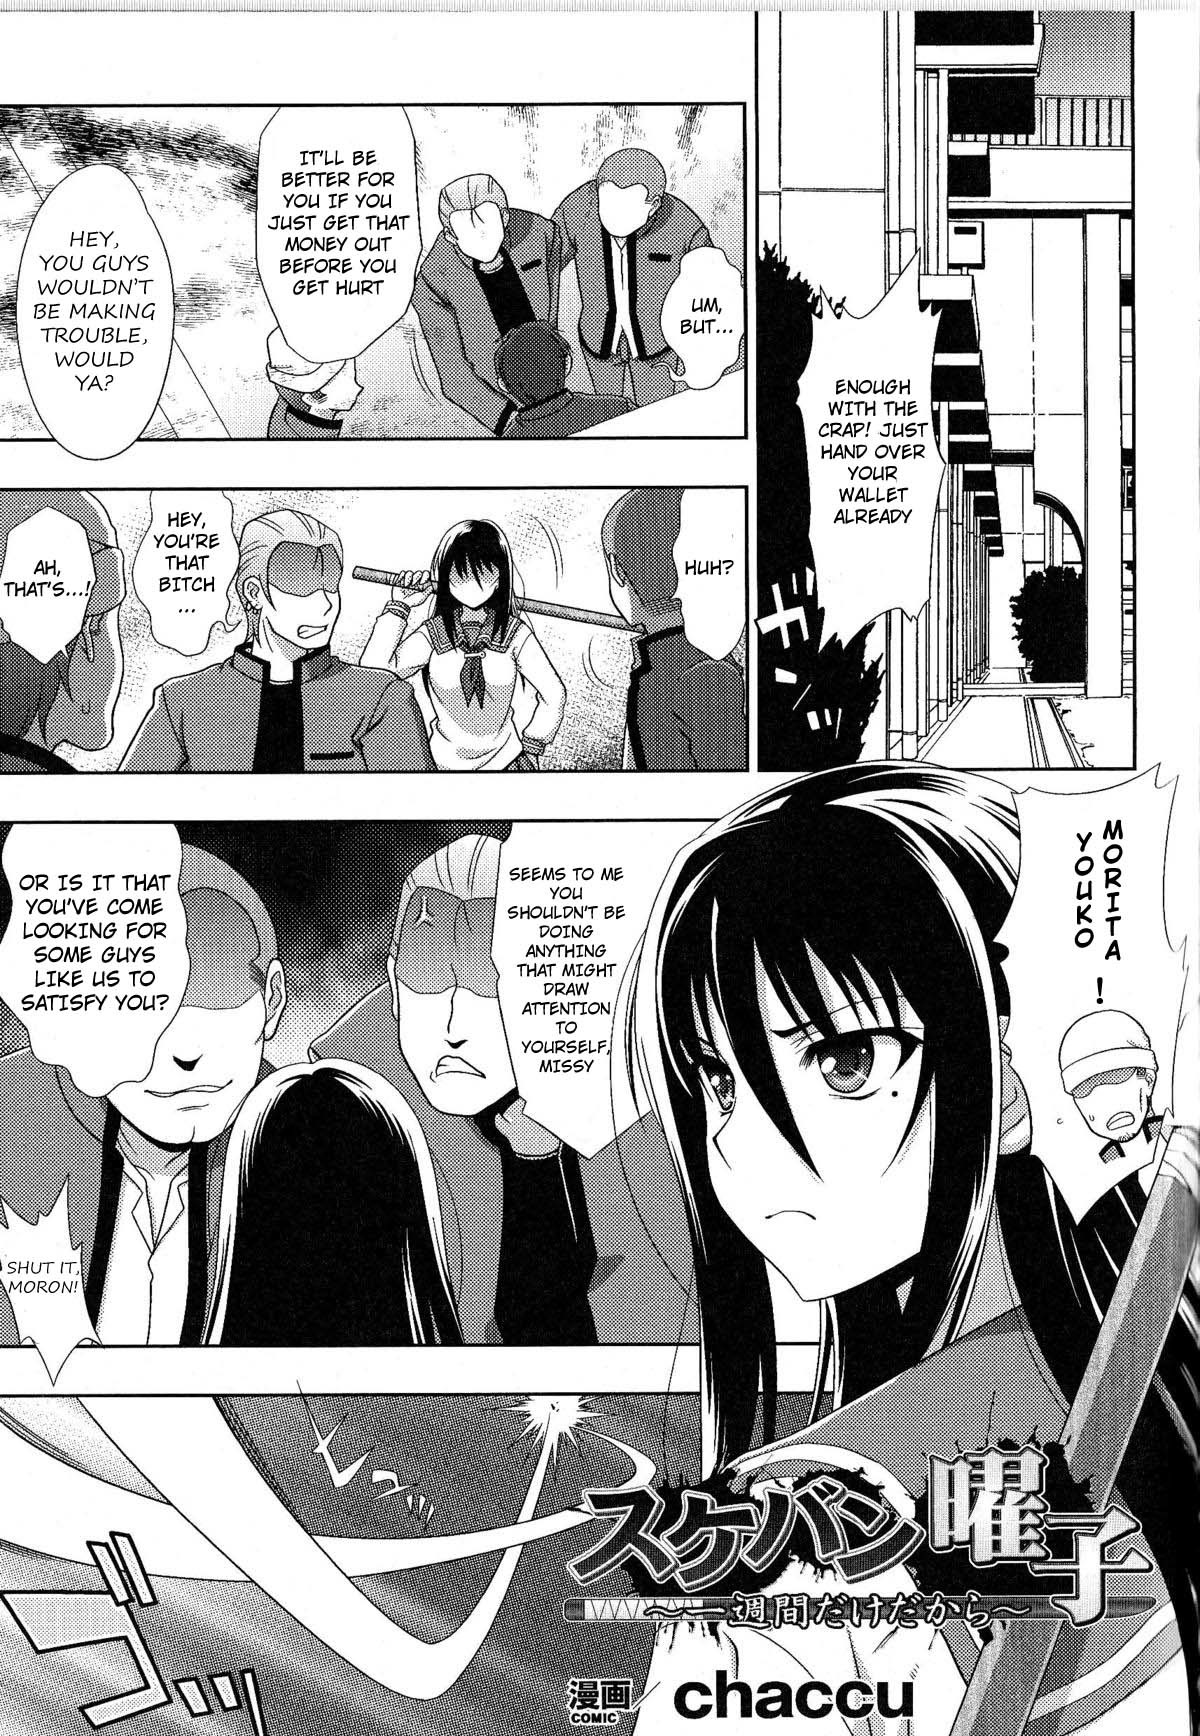 Sex Slave Porn Comics Â» Page 2 Of 4 Â» Hentai Porns - Manga And Porncomics  Xxx Hentai Comics